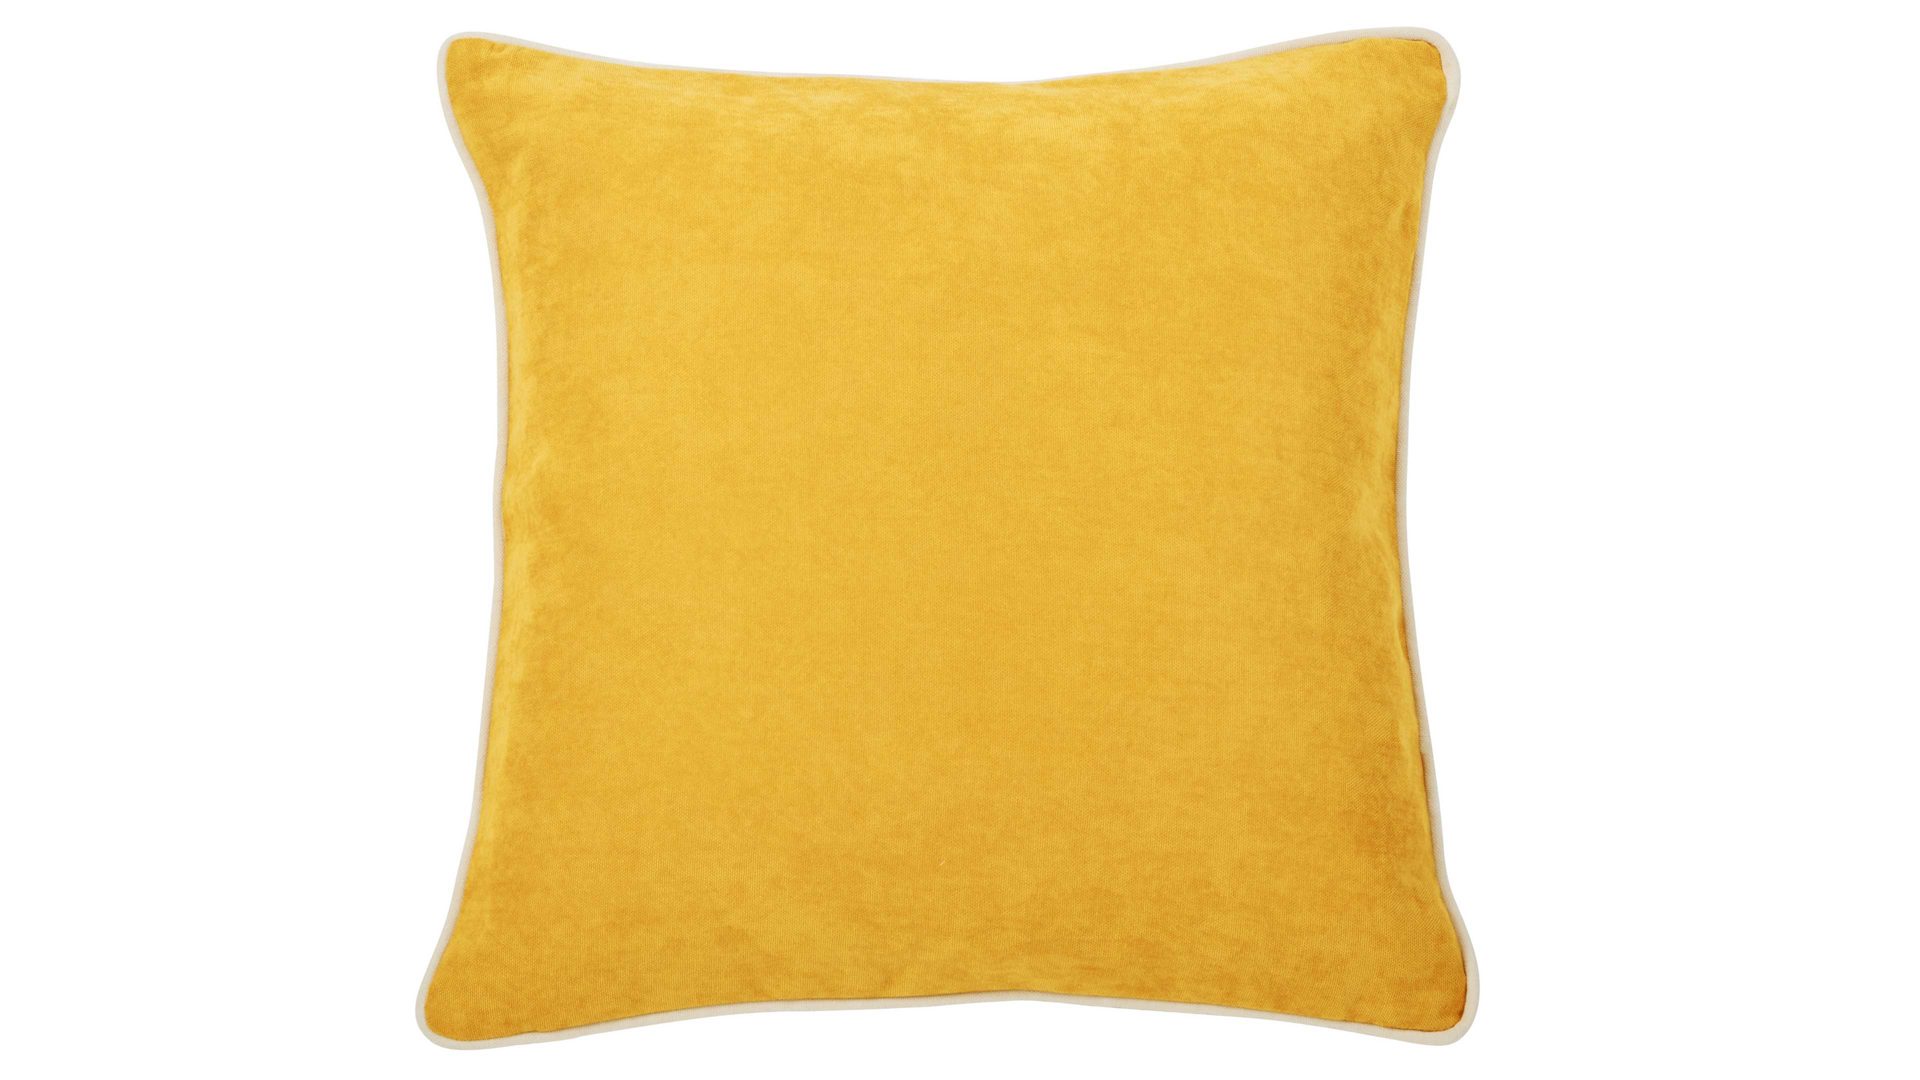 Kissenbezug /-hülle Done.® aus Stoff in Gelb done.® Kissenhülle Cushion Joy gelber Velourbezug  - ca. 45 x 45 cm